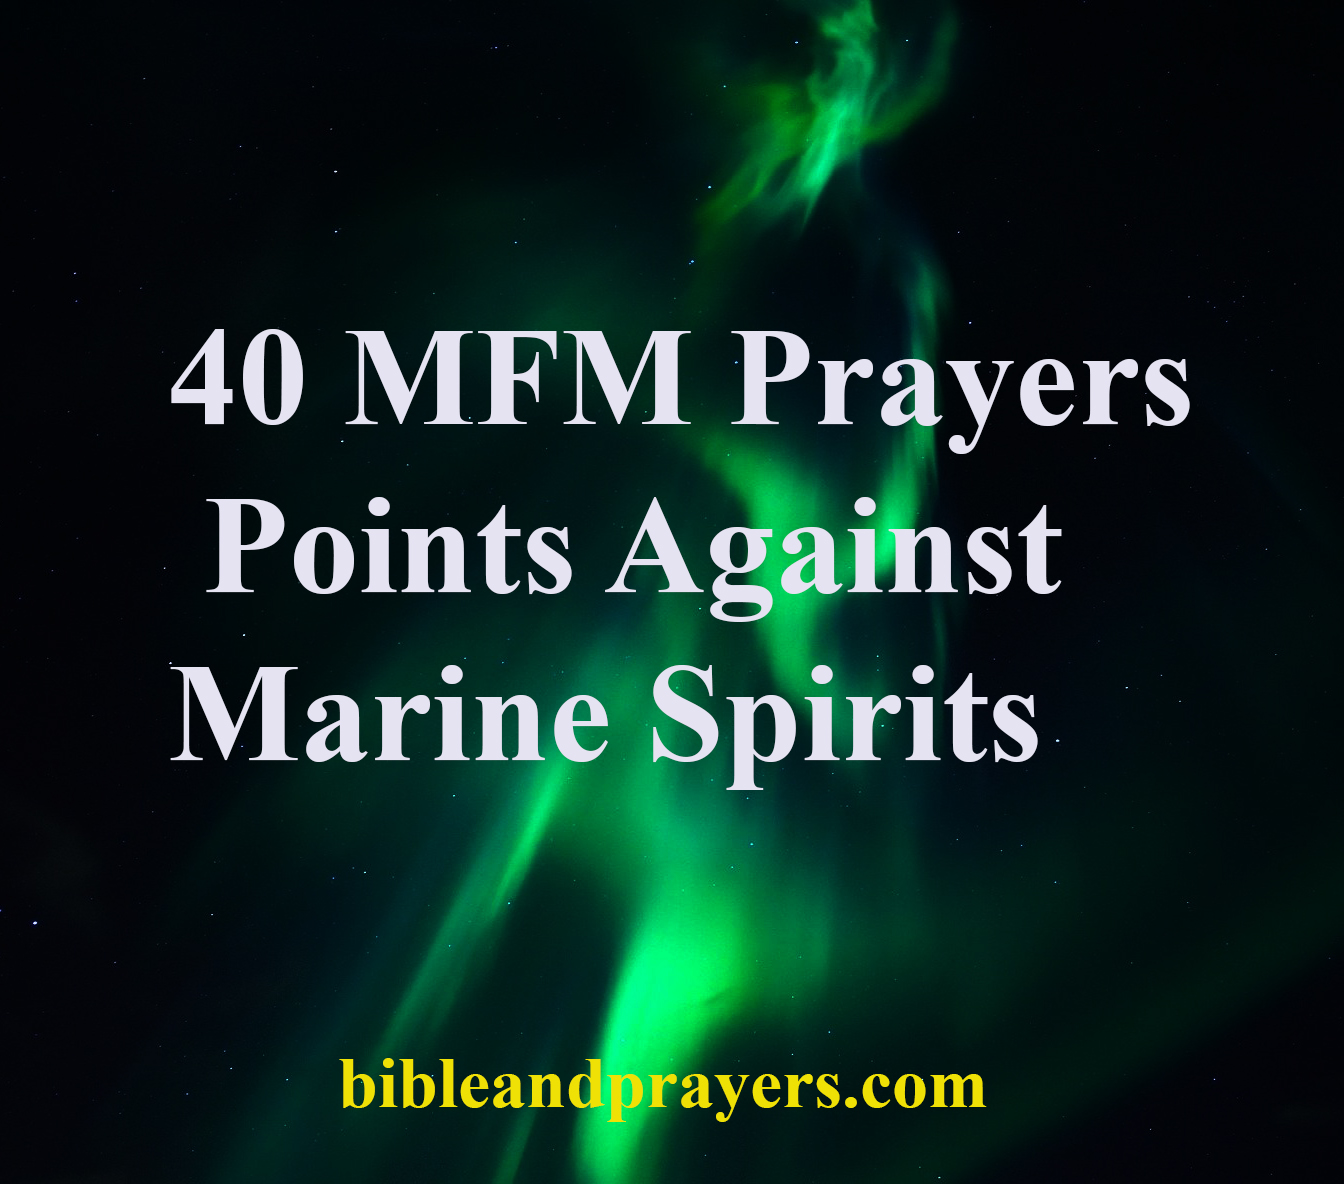 40 MFM Prayers Points Against Marine Spirits